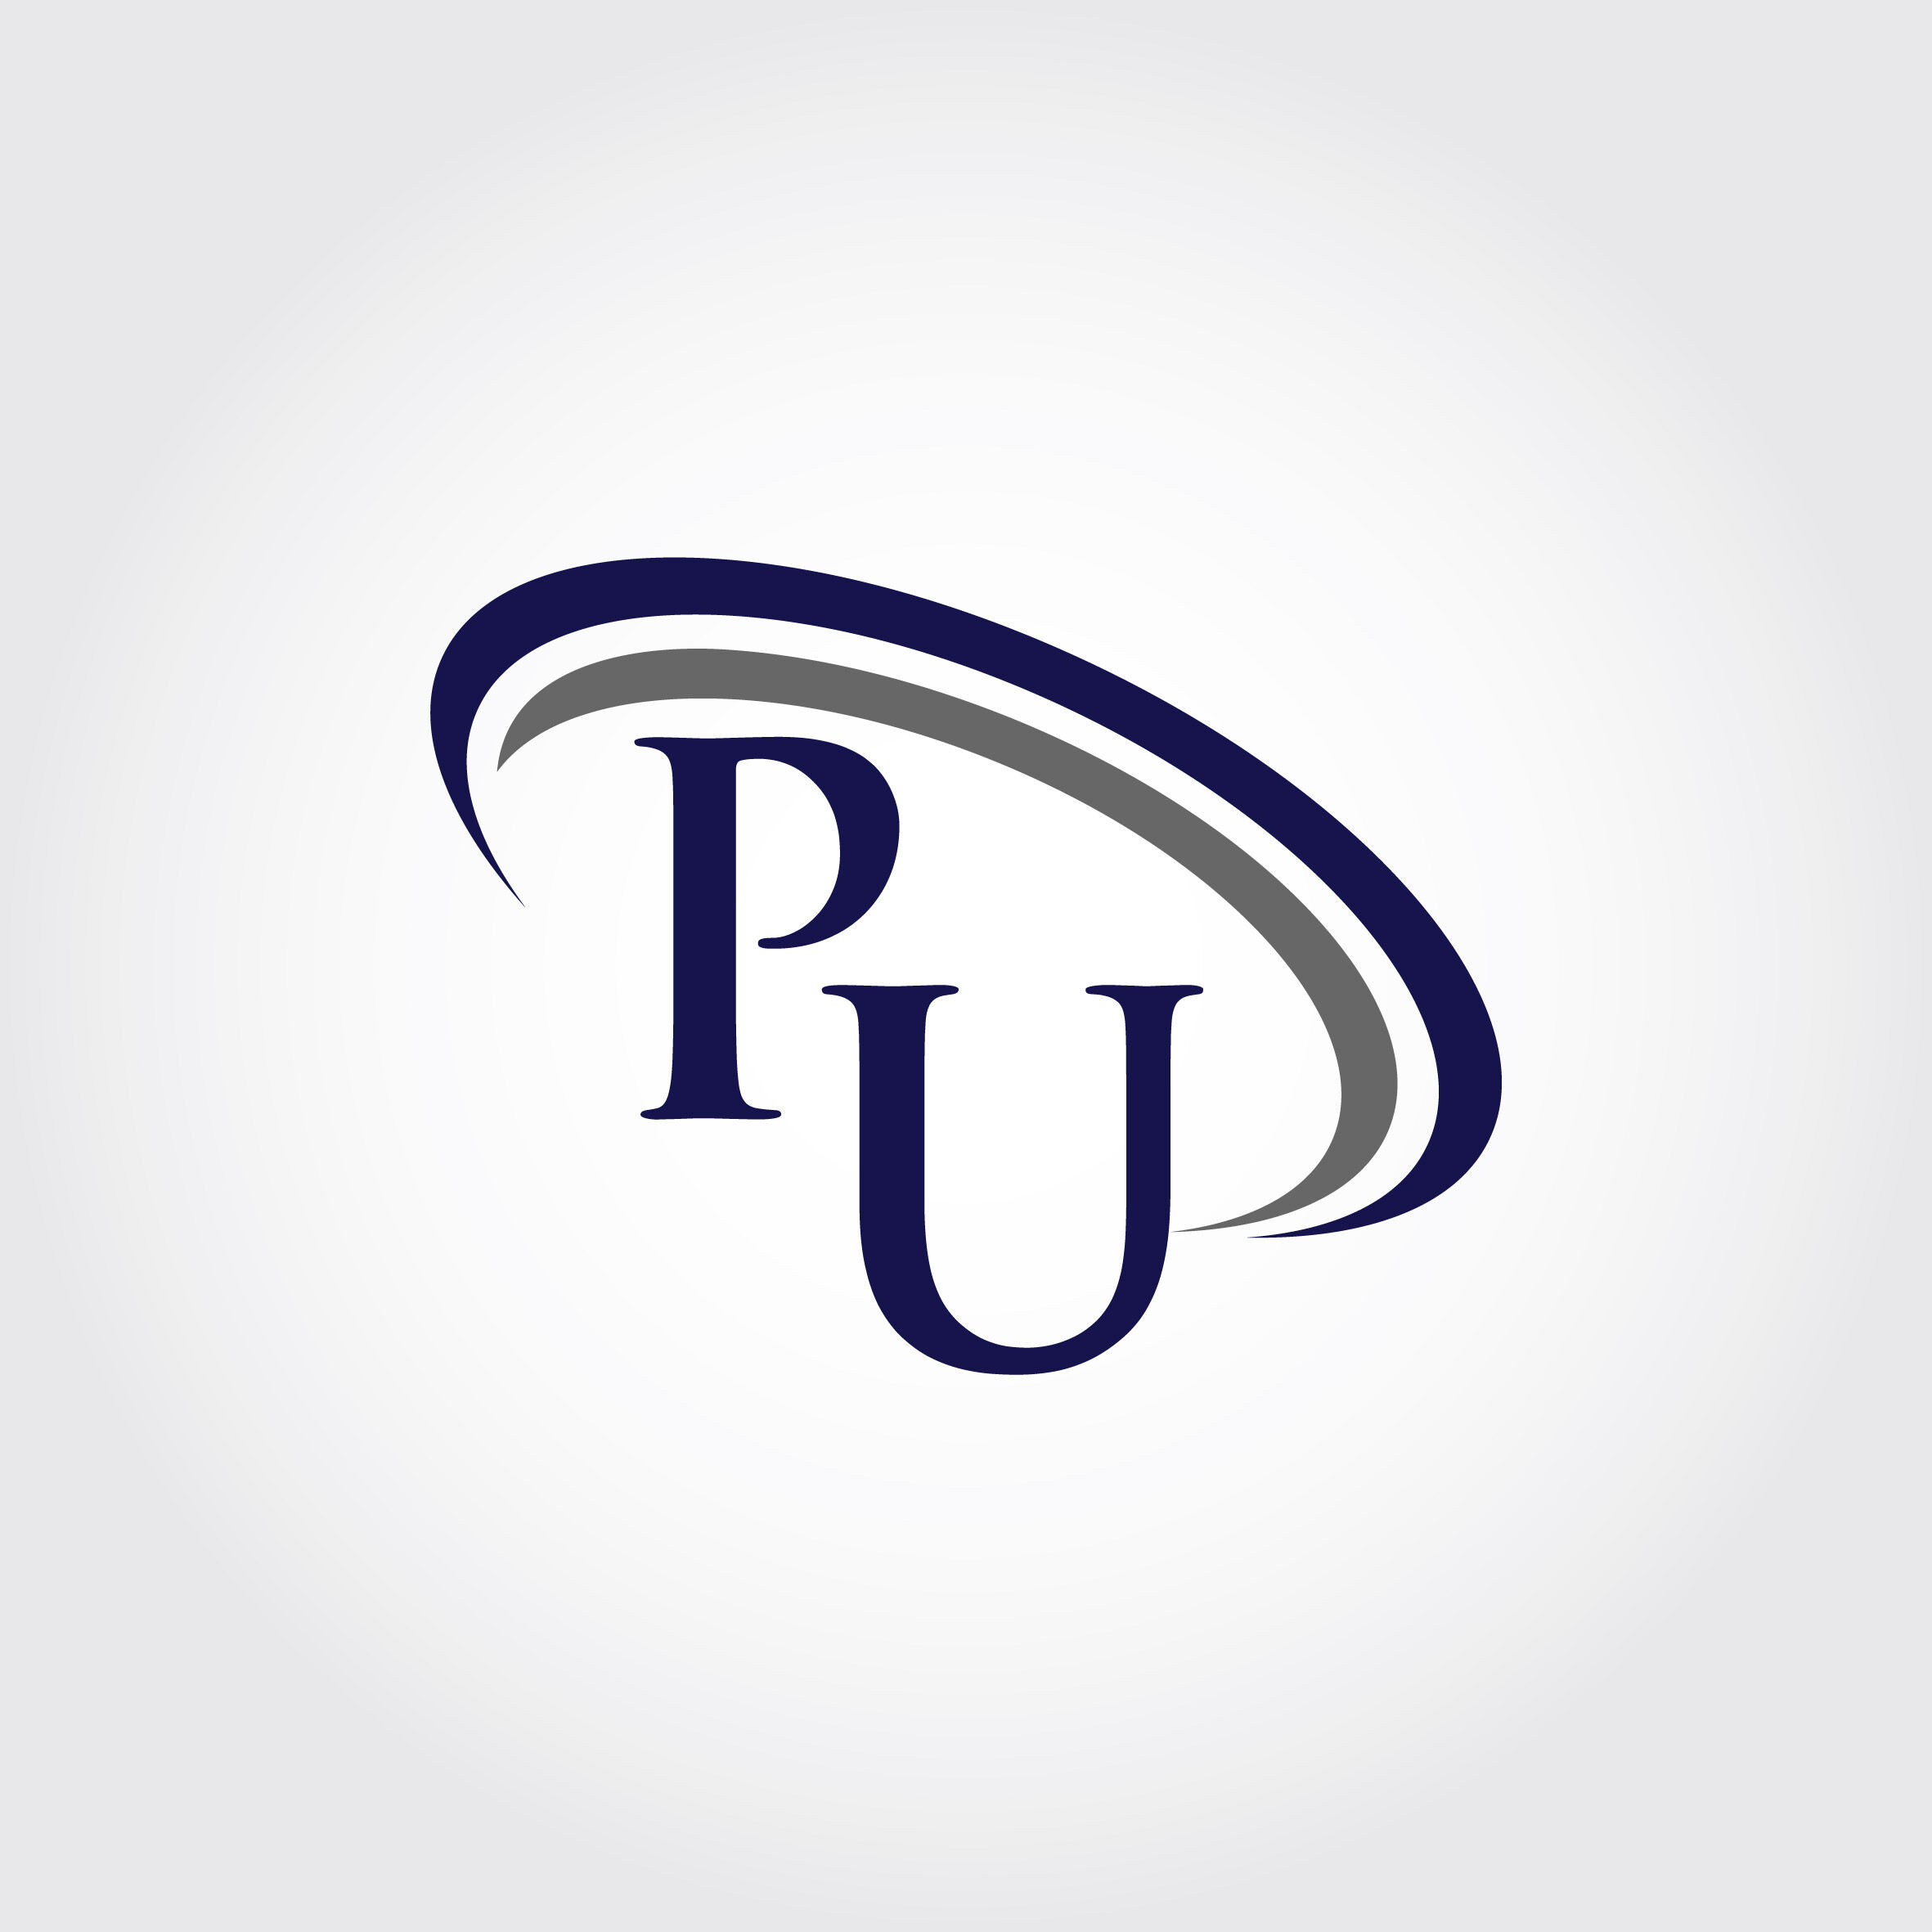 Monogram Pu Logo Design By Vectorseller Thehungryjpeg Com